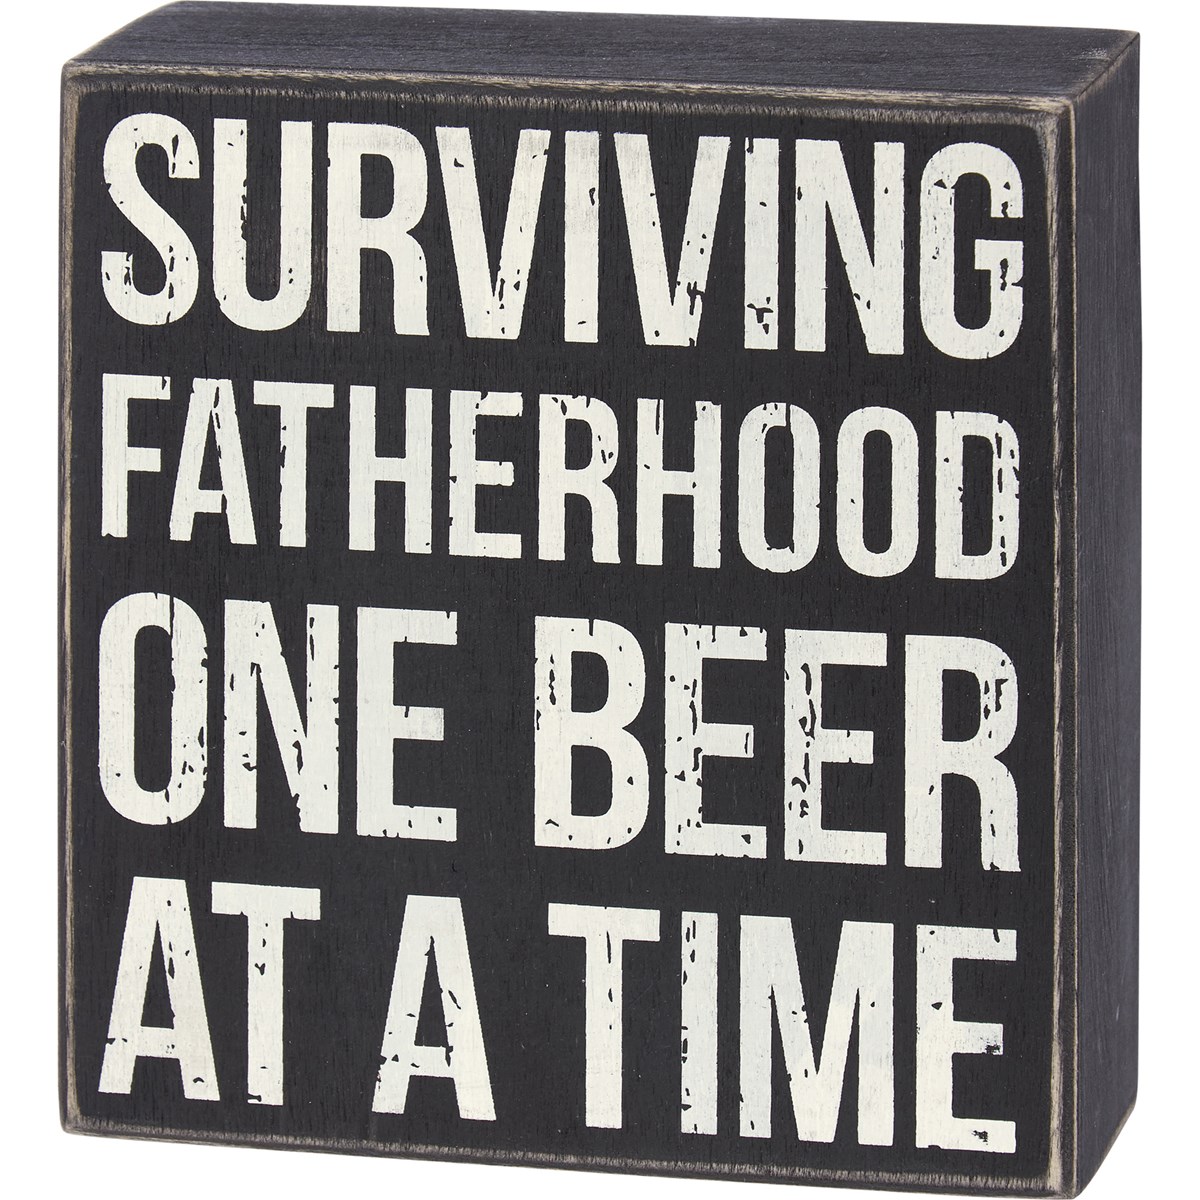 Surviving Fatherhood One Beer Box Sign - Wood